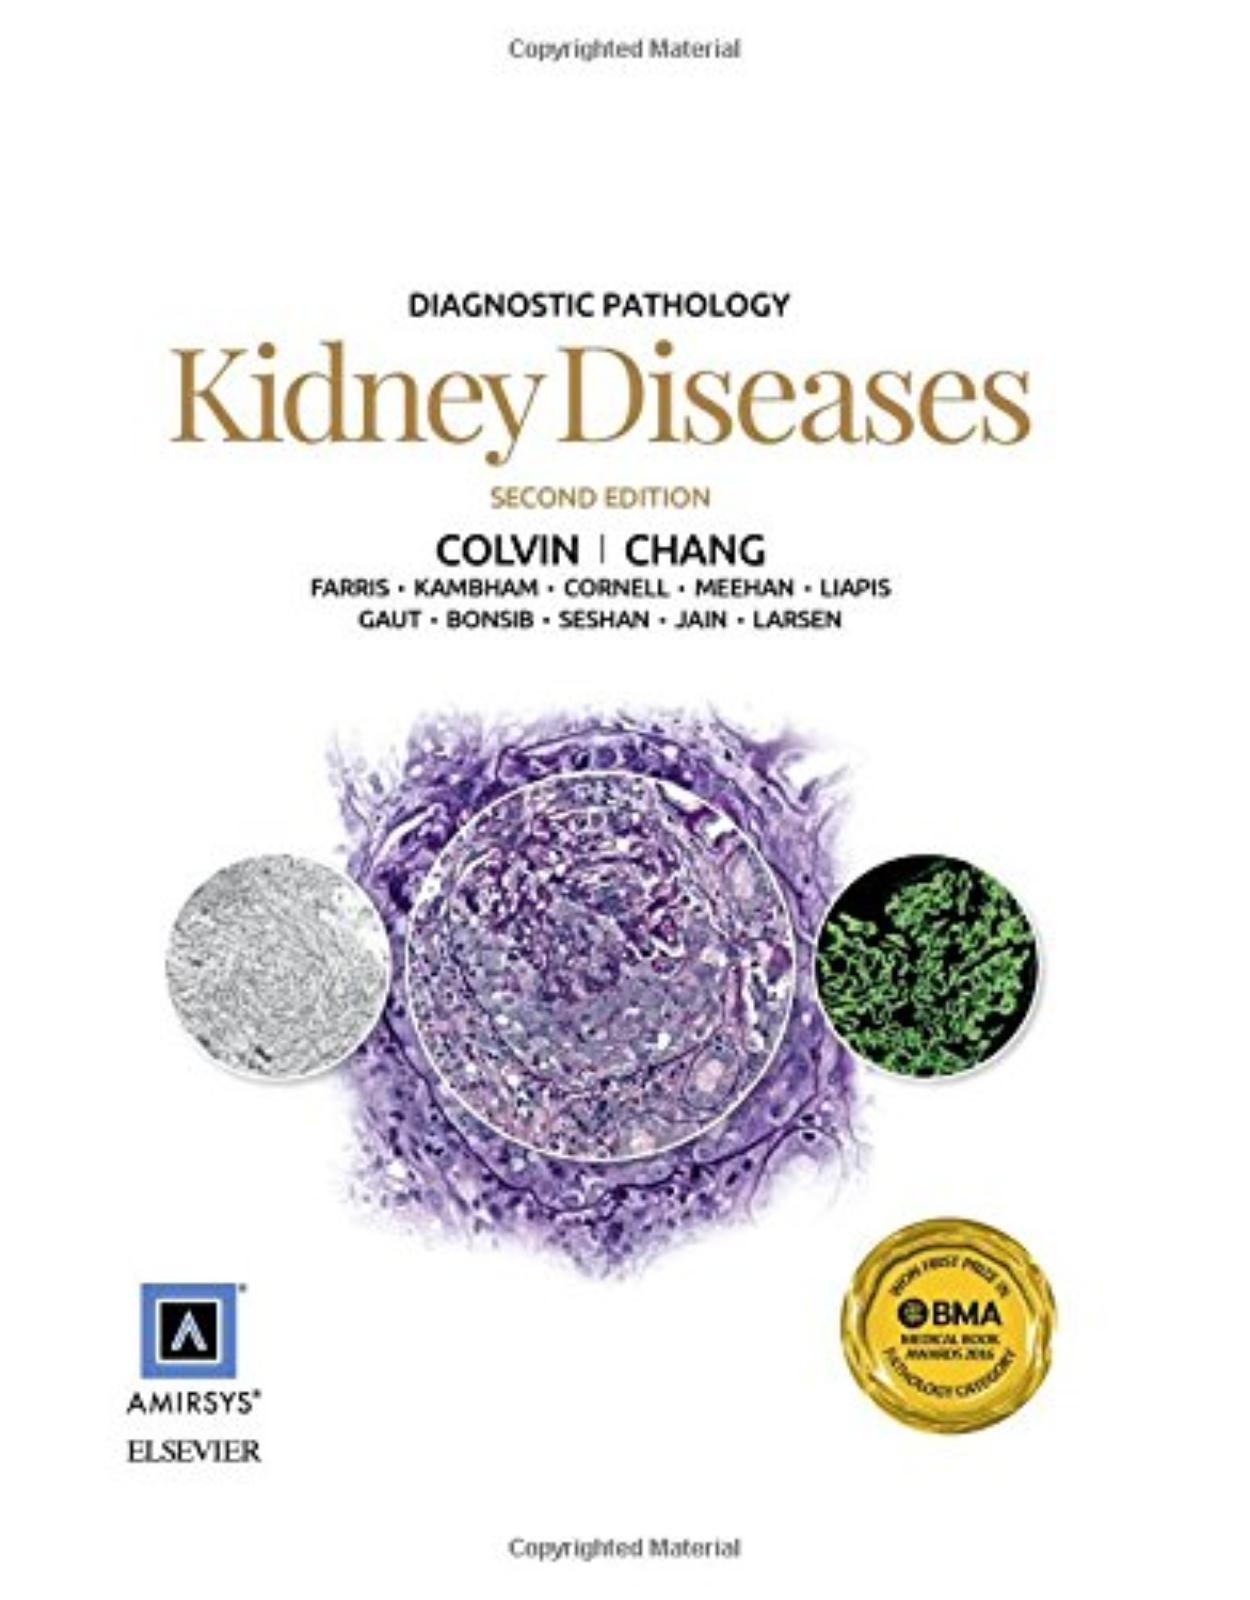 Diagnostic Pathology: Kidney Diseases, 2nd Edition